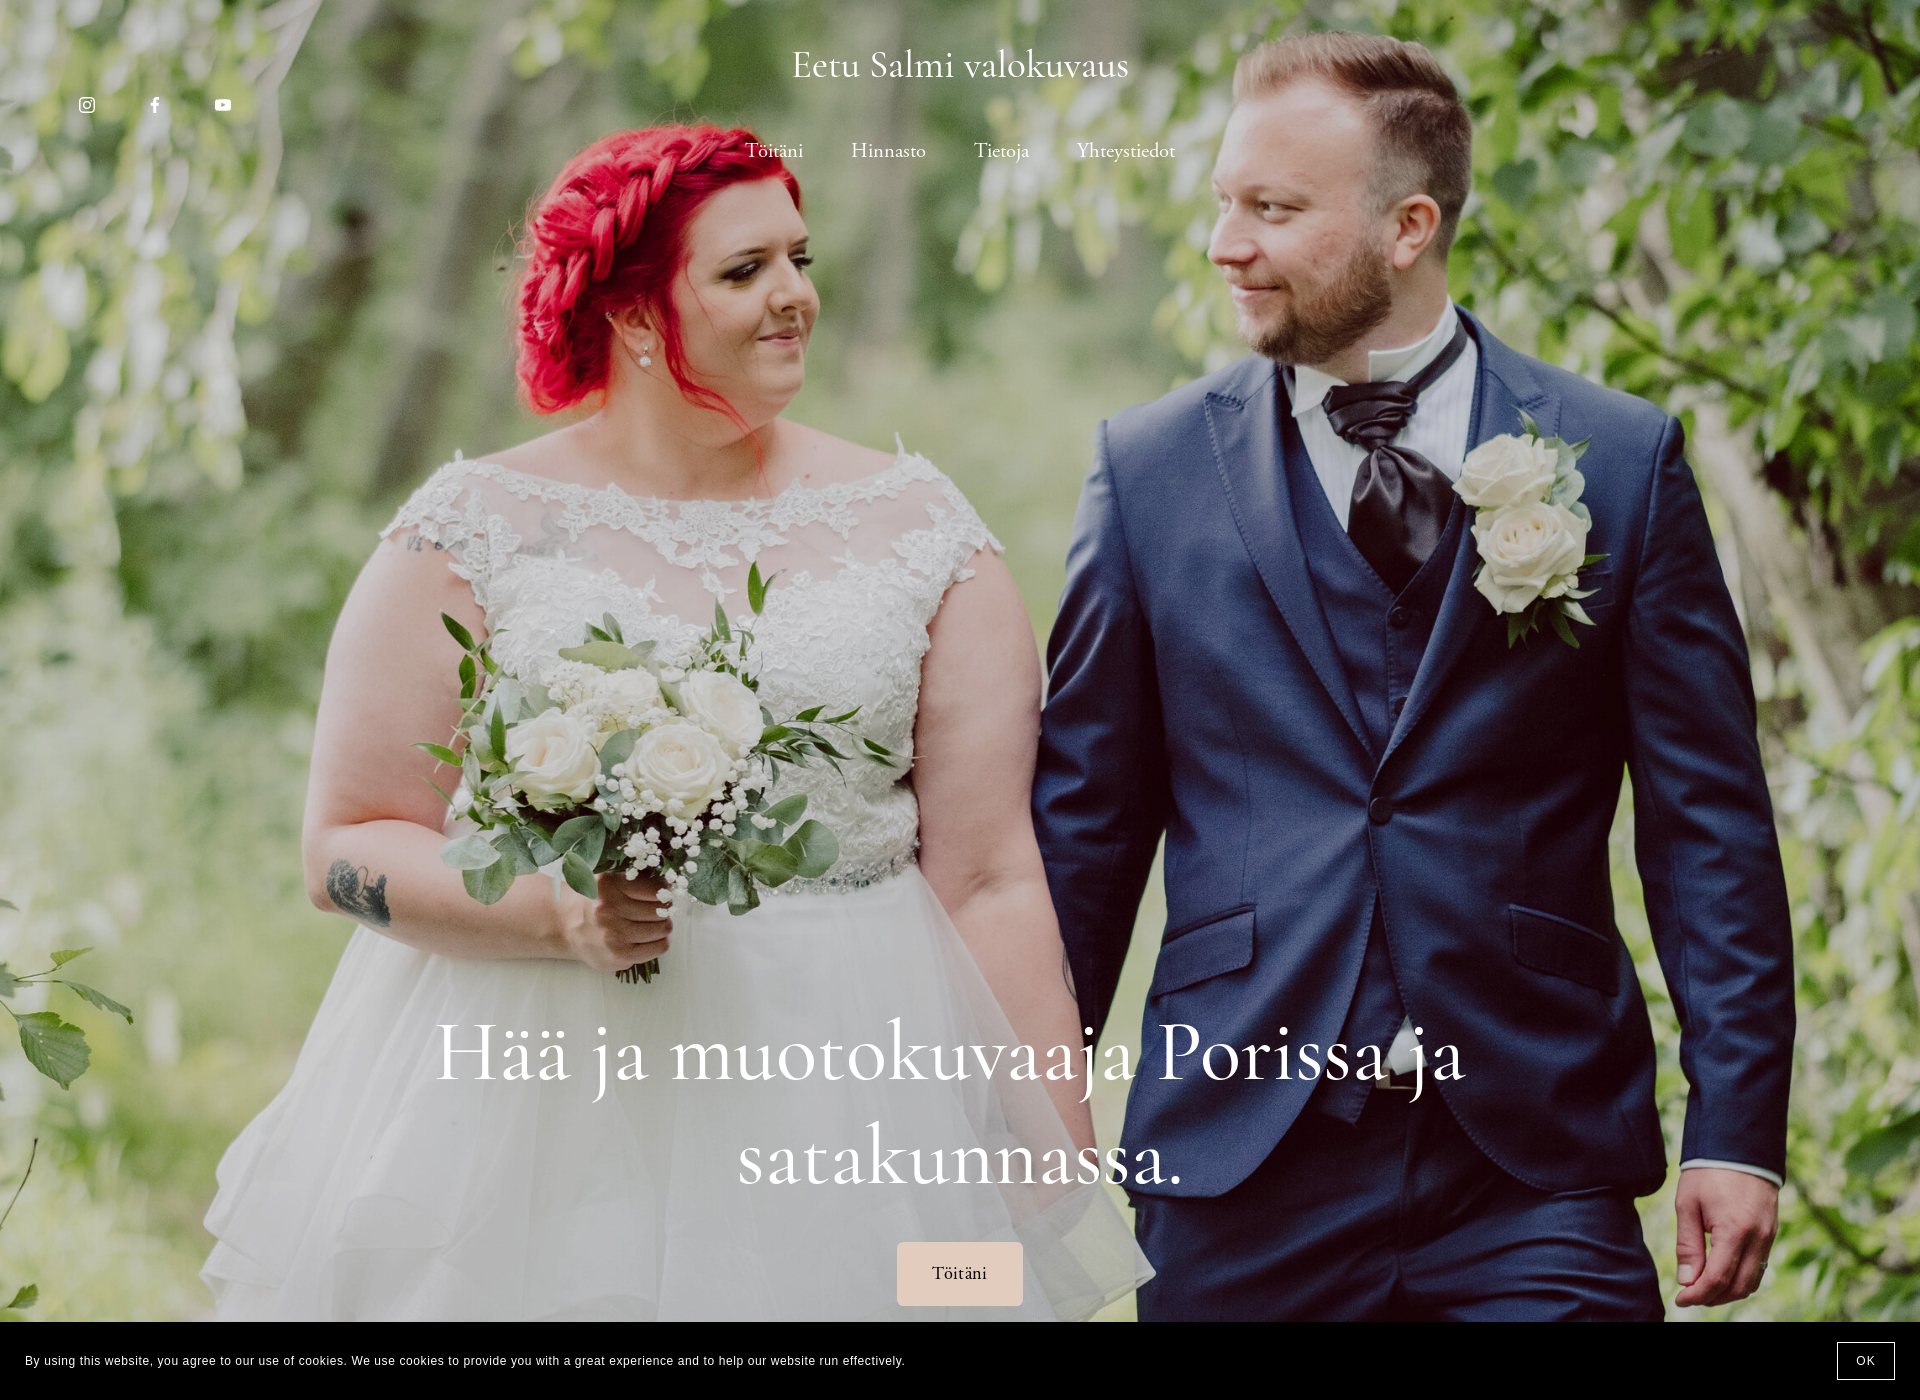 Screenshot for eetusalmivalokuvaus.fi